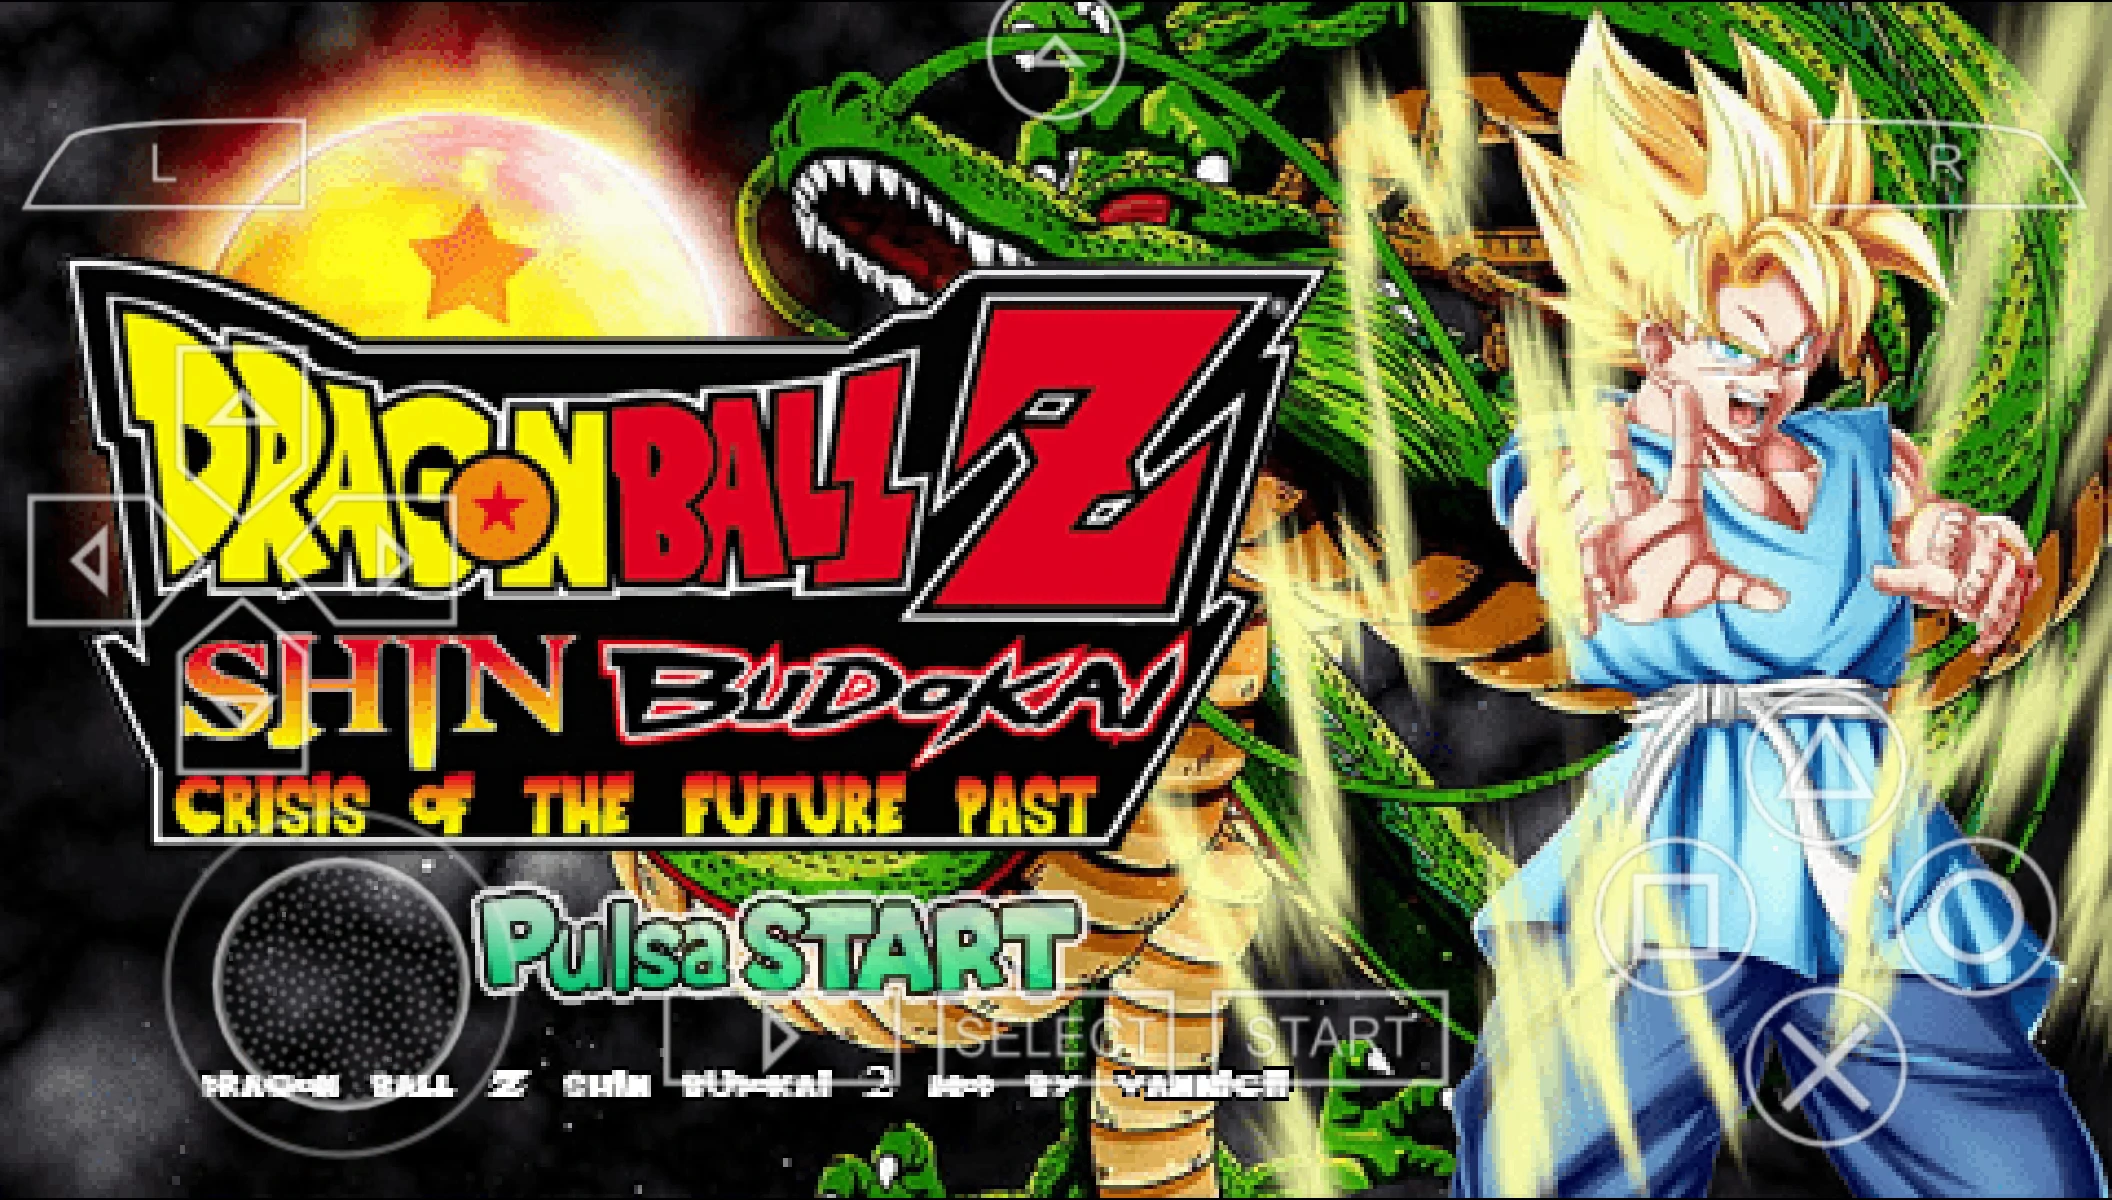 Dragon Ball Z Shin Budokai 2 Crisis of the Future Past